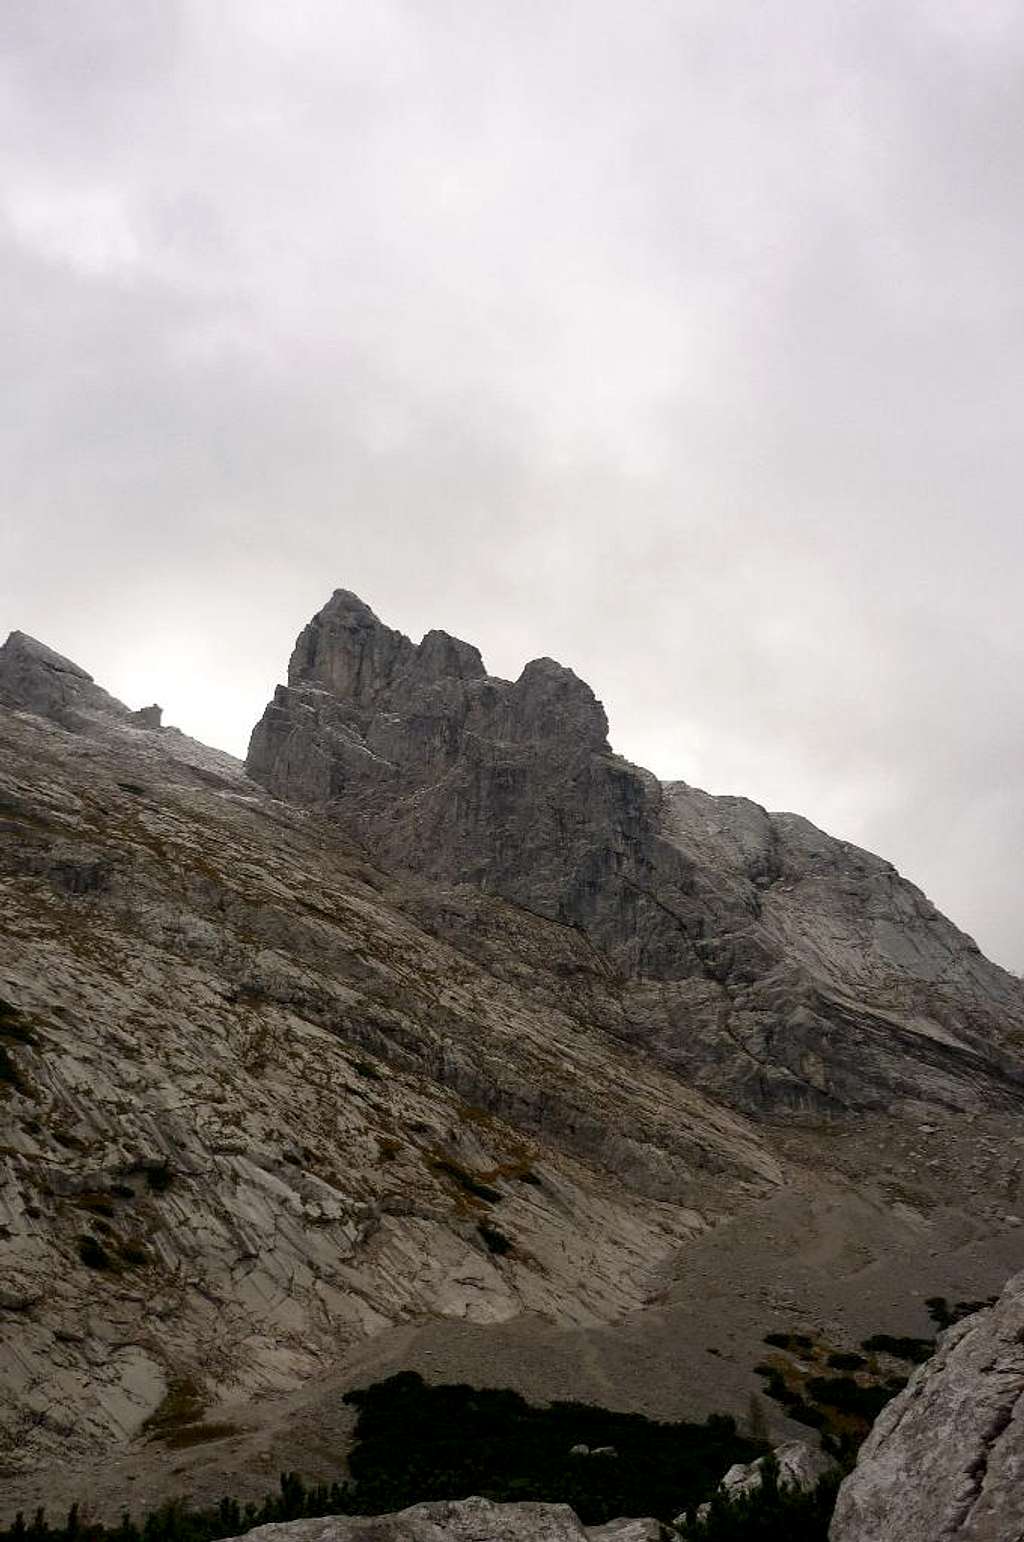 View from the Blaueishütte